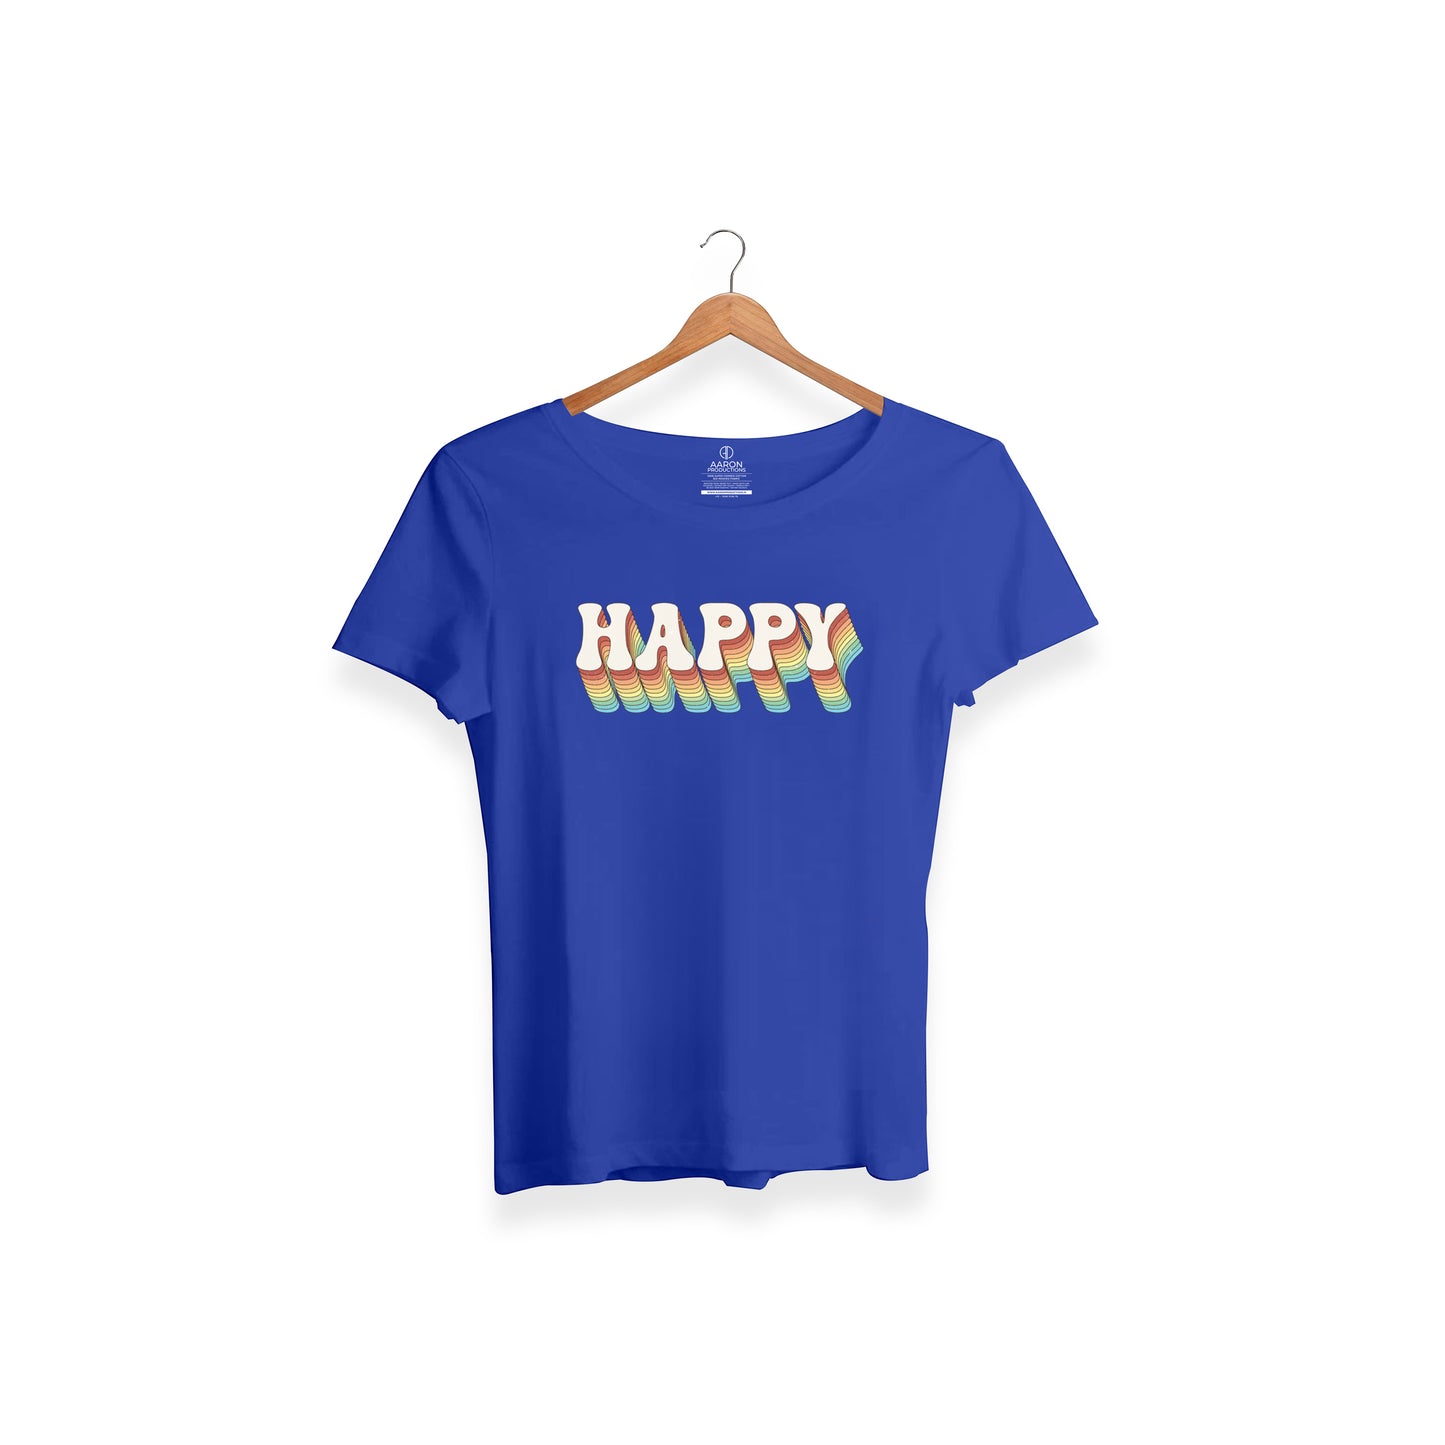 Happy - Girls tshirt